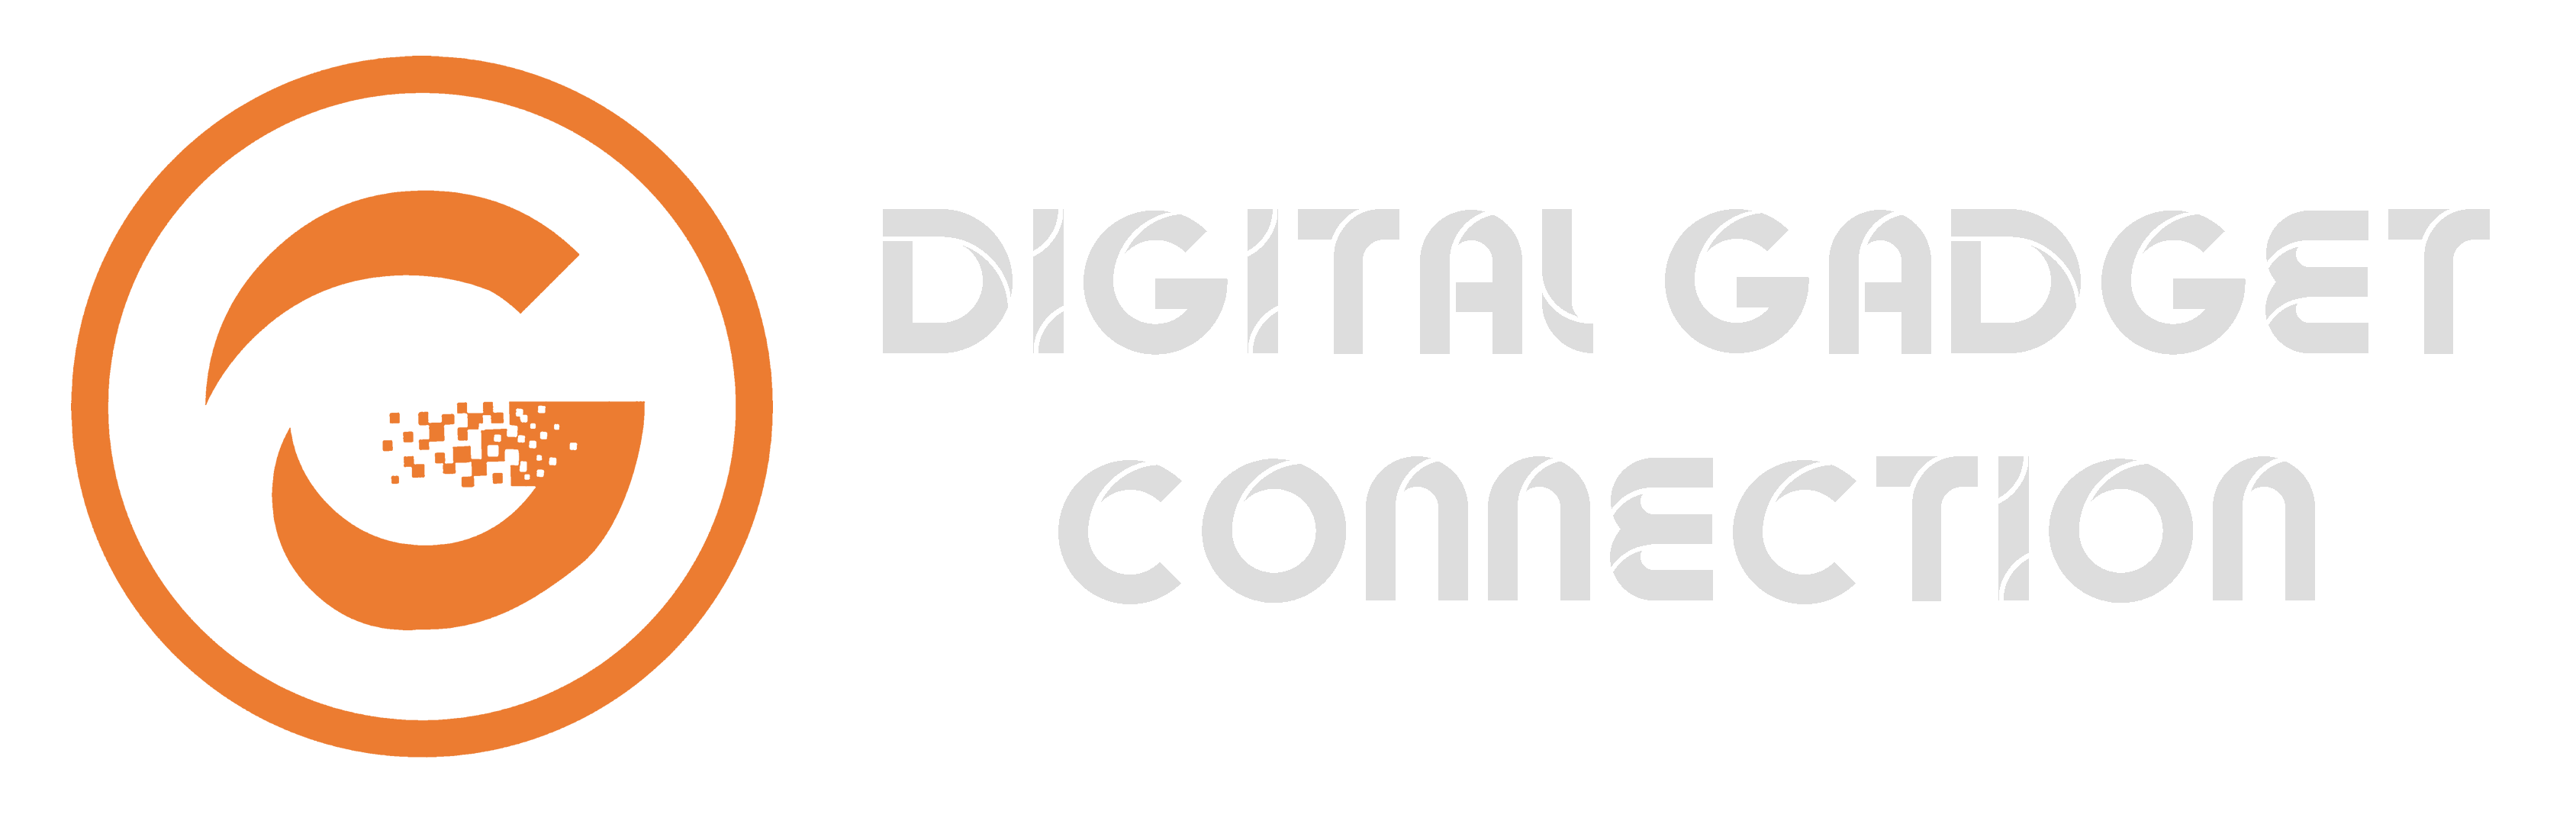 Digital Gadget Connection